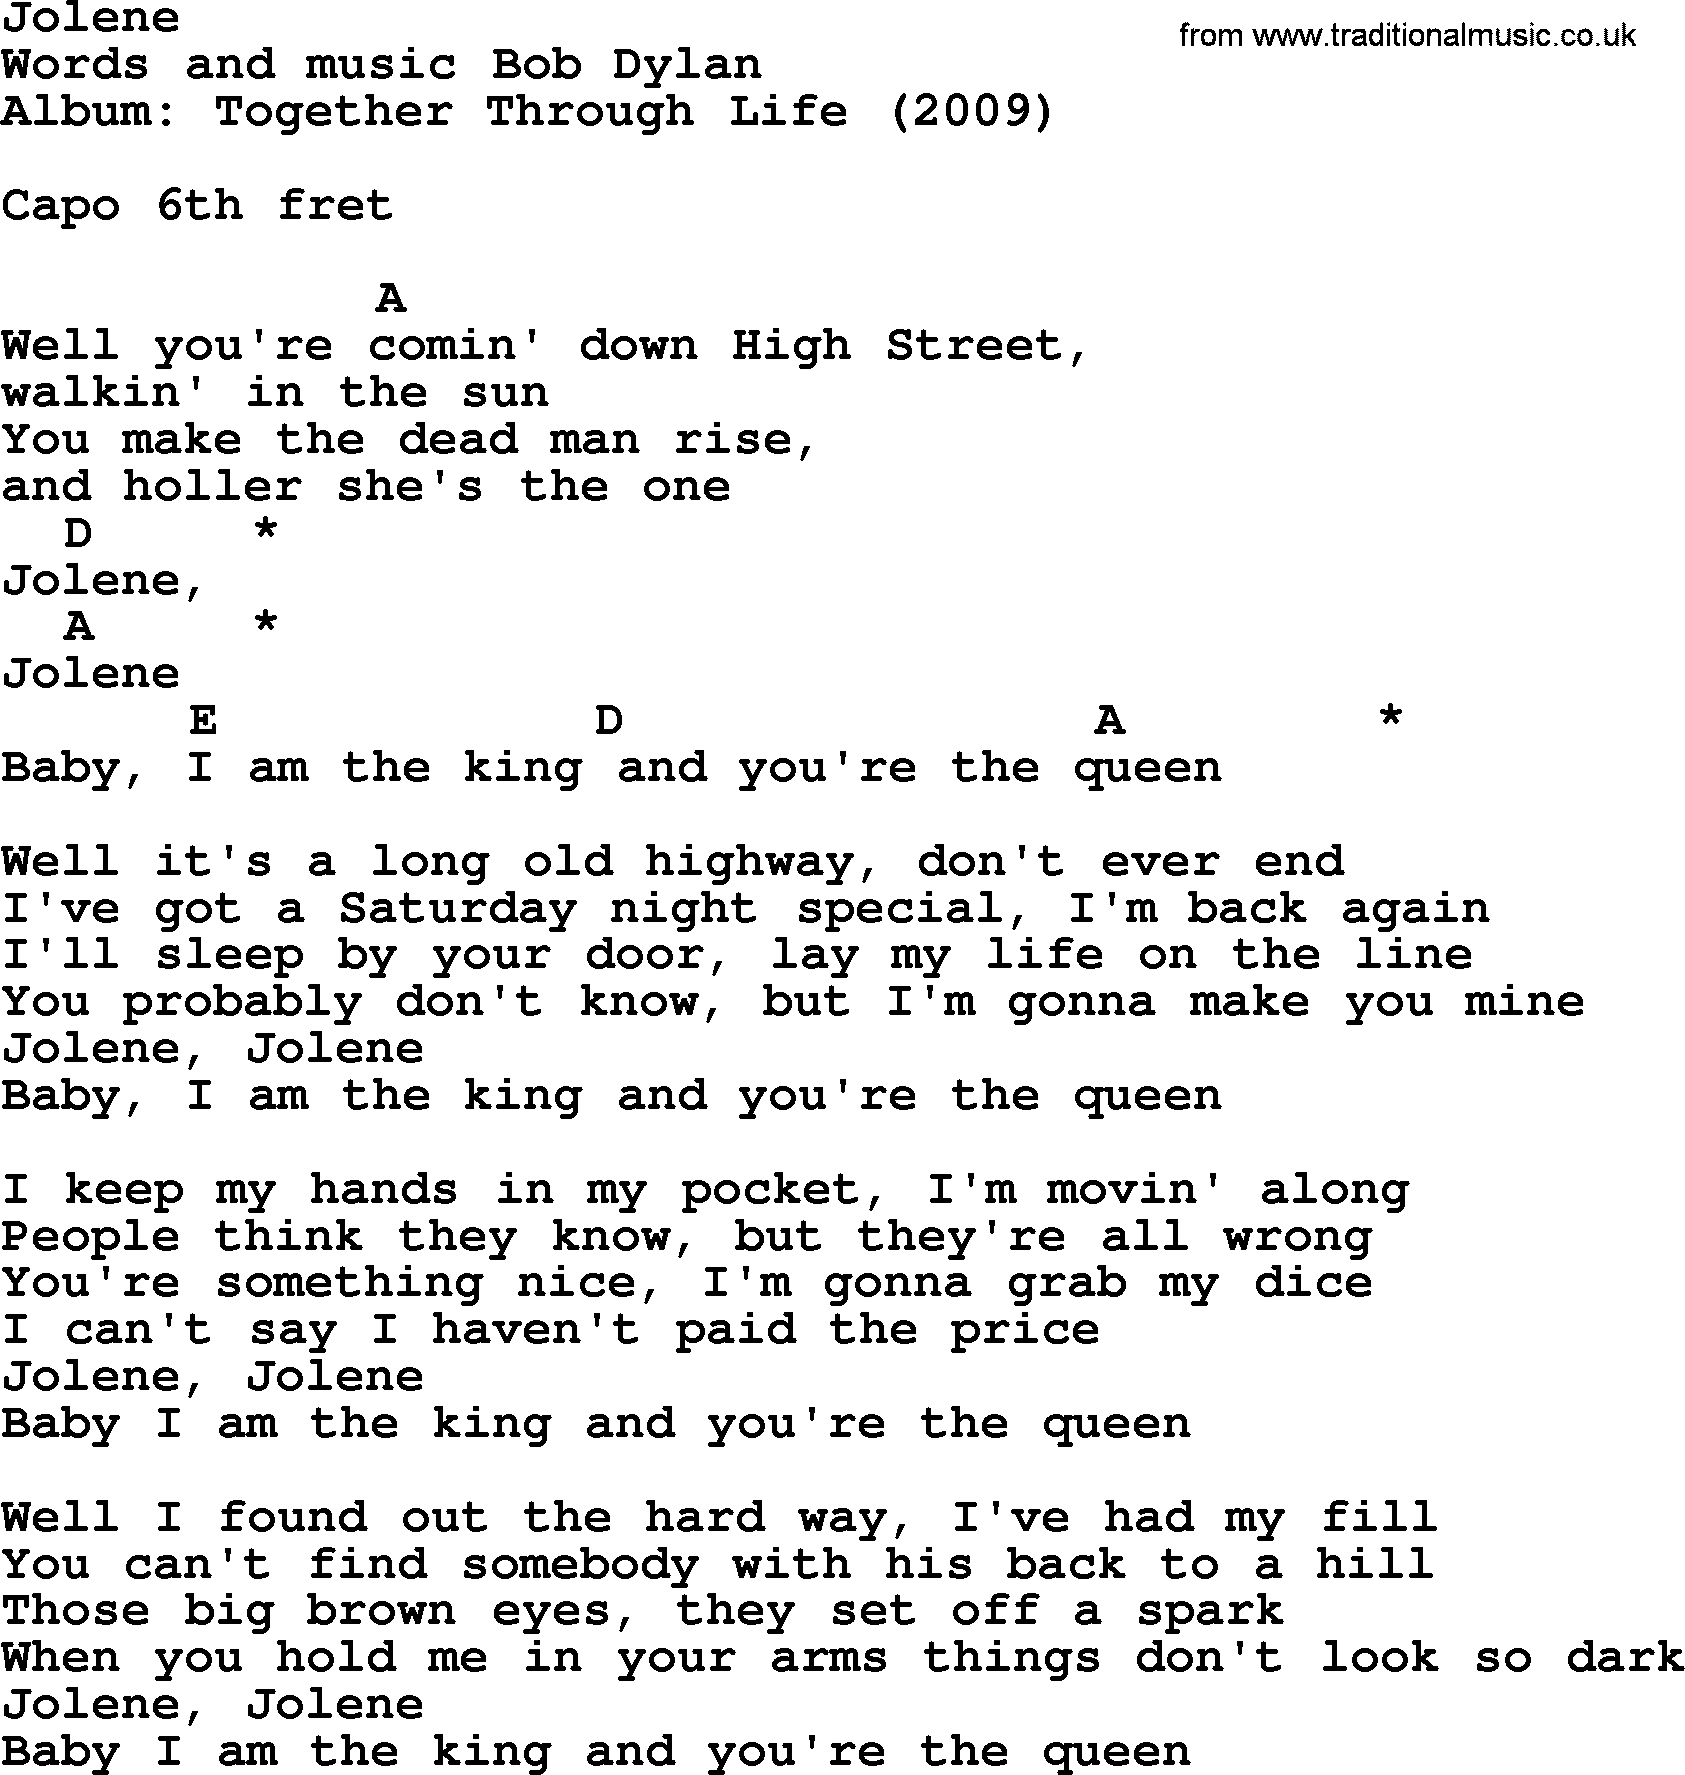 Bob Dylan song, lyrics with chords - Jolene